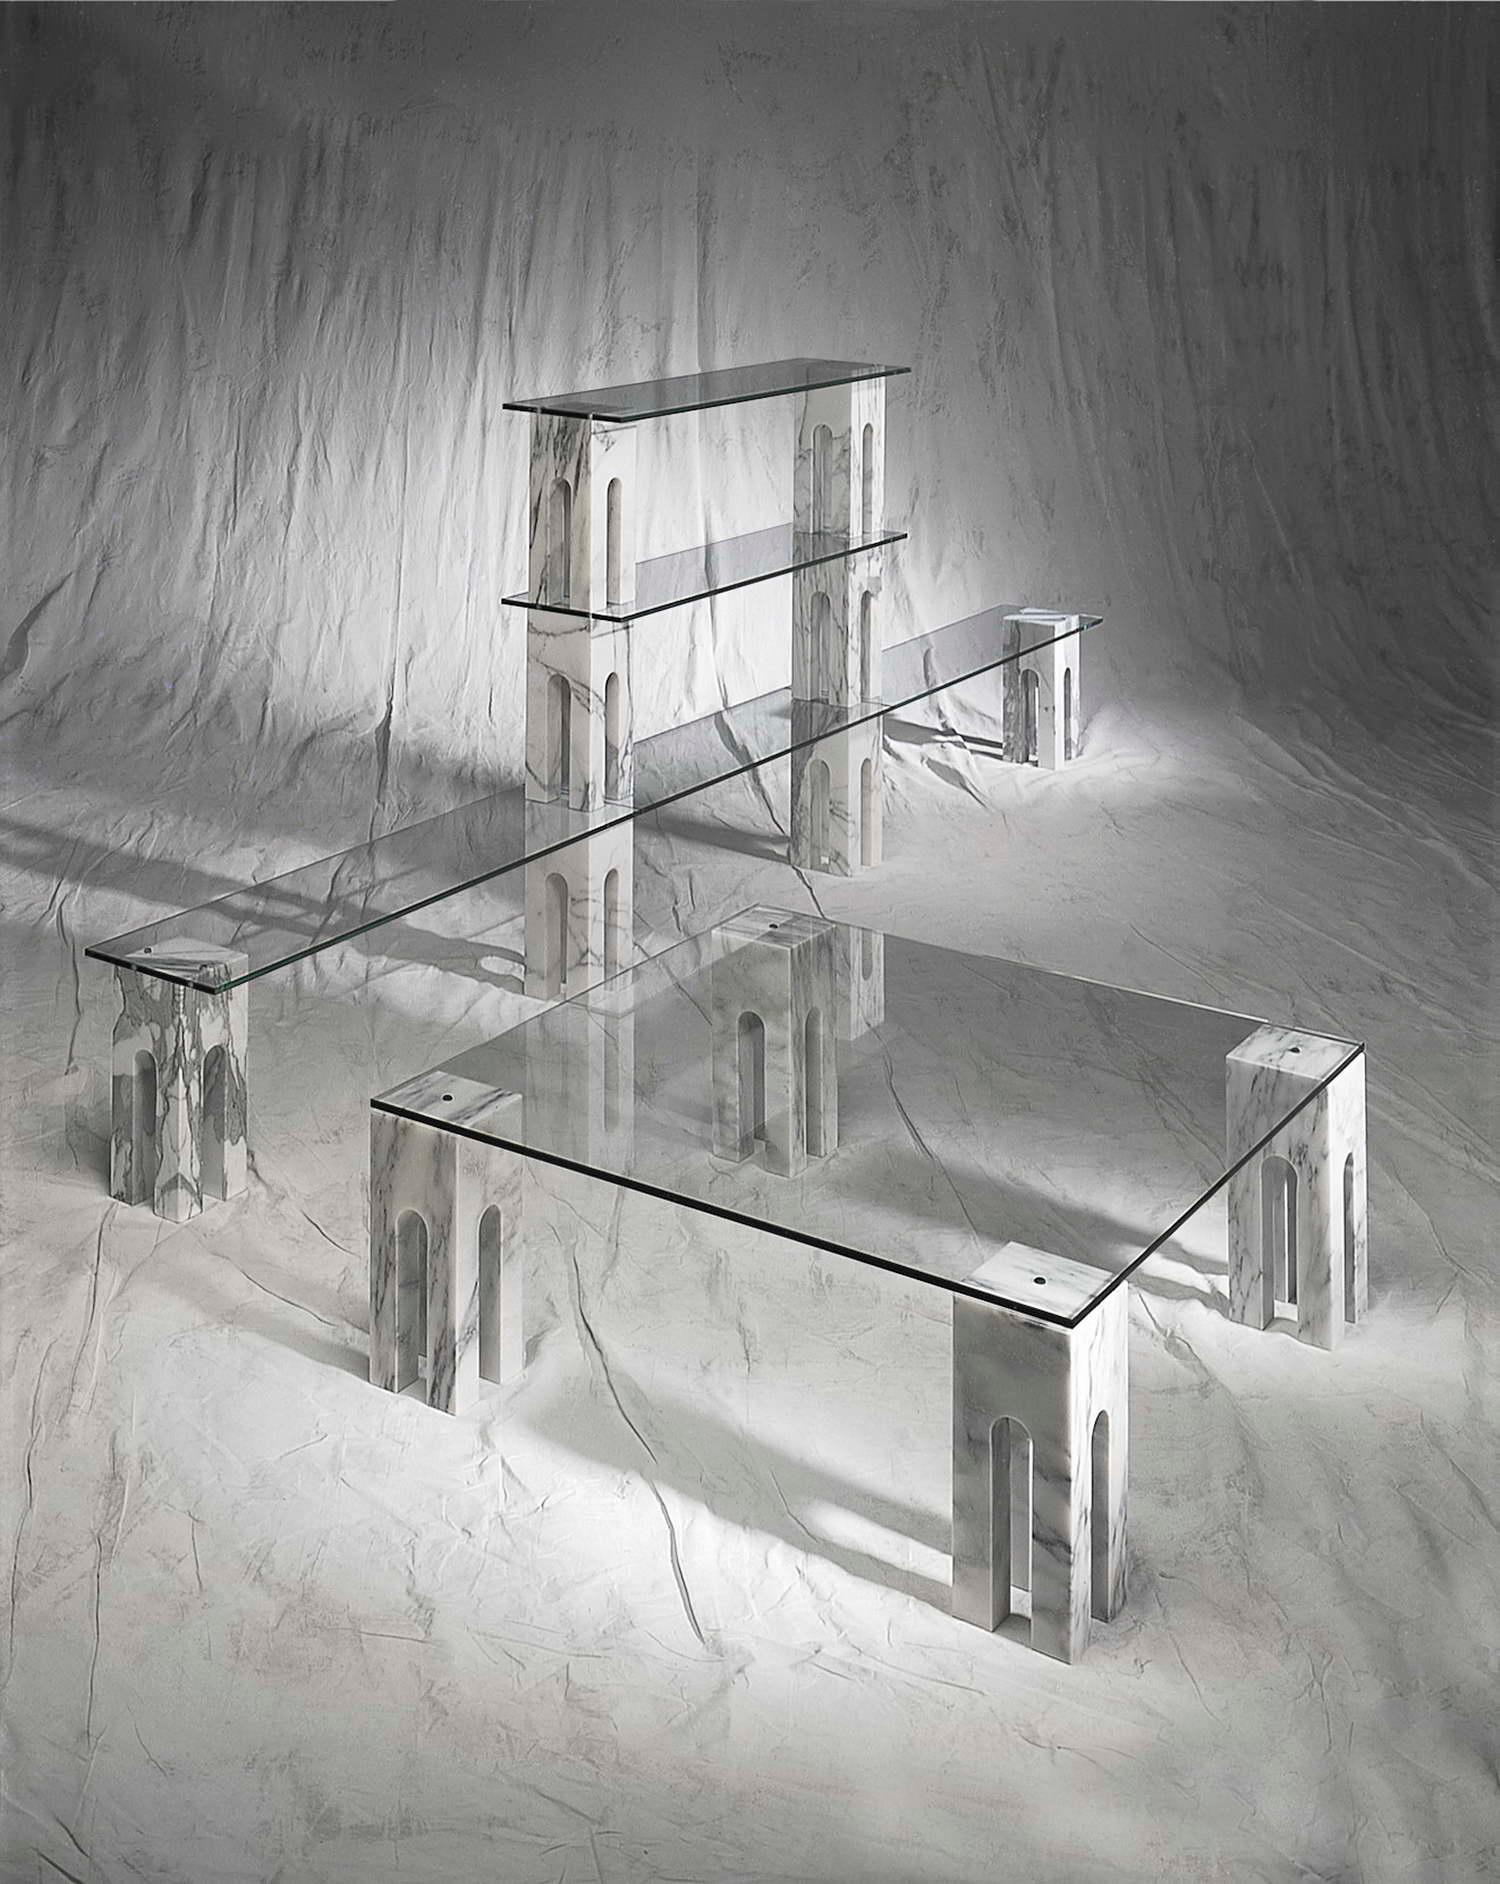 Name: TEMPIETTO
Marble table designed by Alessandro Mendini
Size: Cm 100 x 100 x 37.5 H
Materials: Bianco Carrara - Calacatta- Travertino Nazionale - Crystal Top.
 